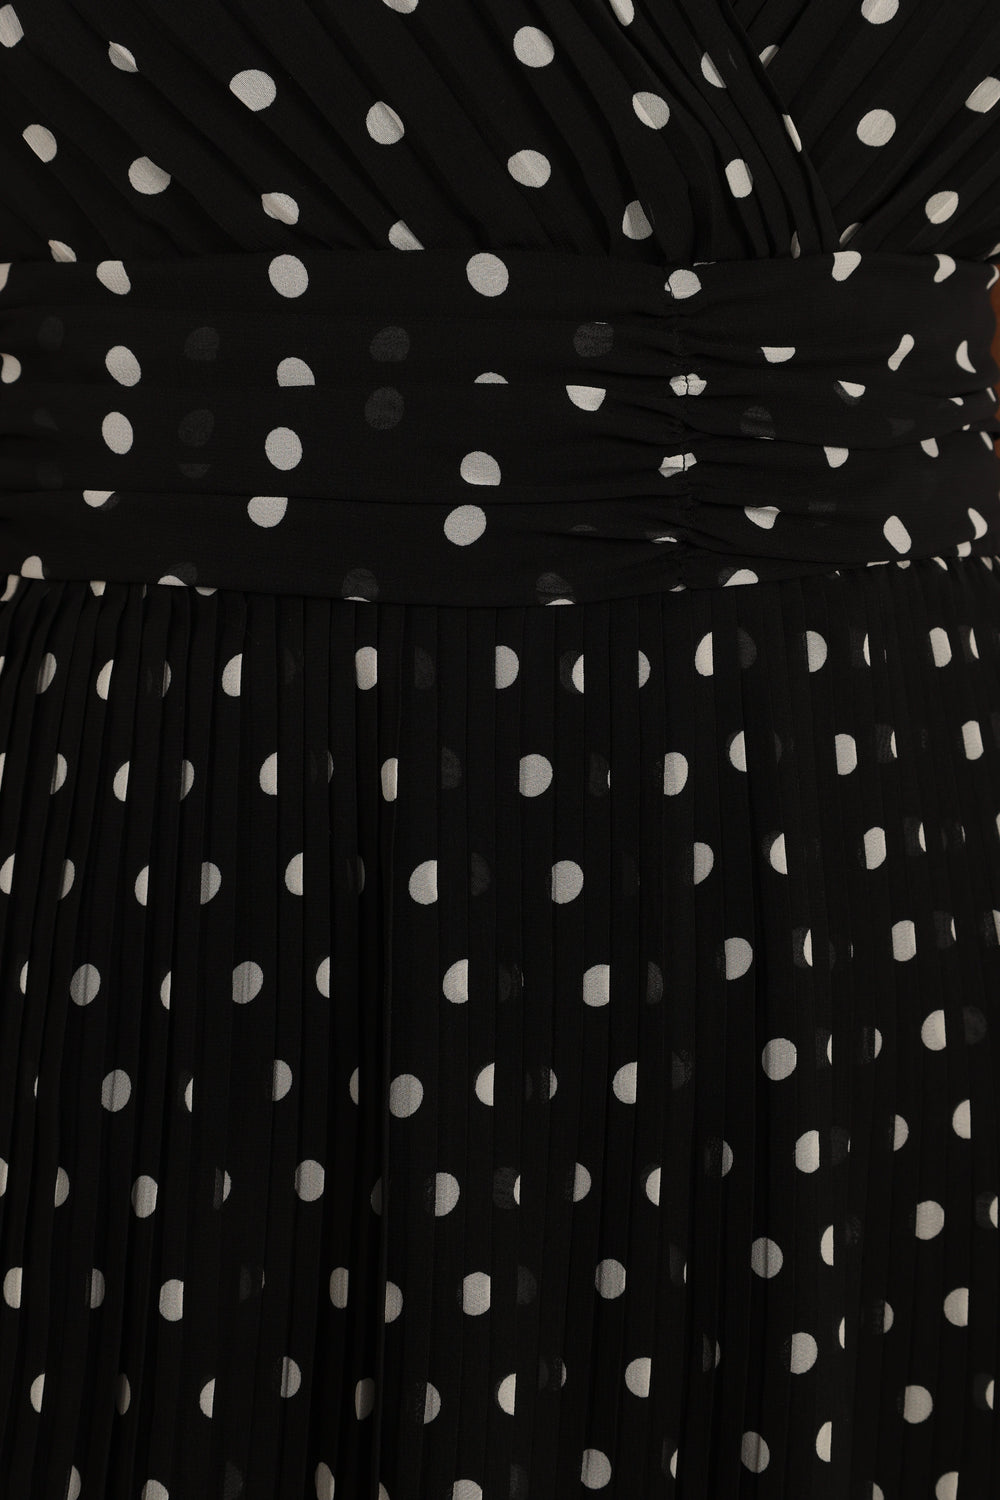 DRESSES @Andromeda Midi Dress - Black White Polka Dot